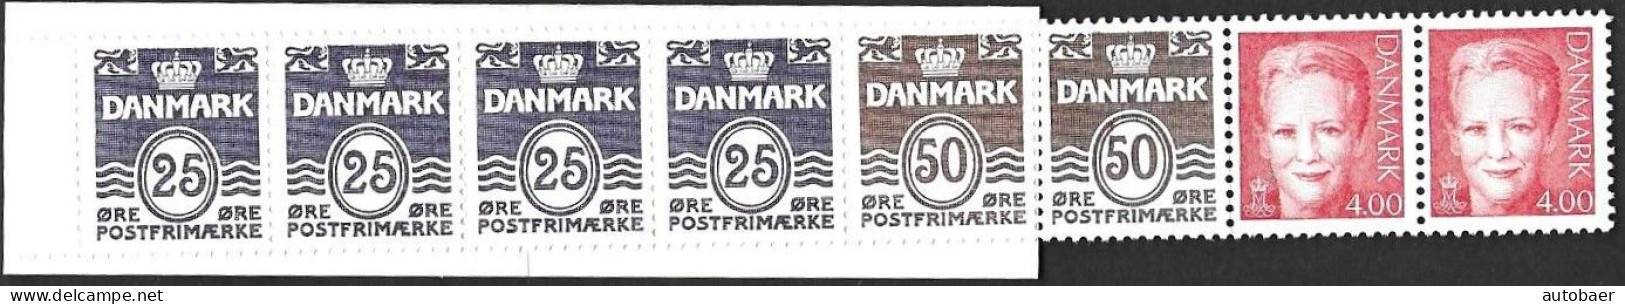 Denmark Danmark 2000 Queen Margrethe Michel No. MH 60 Carnet Booklet Mint MNH Neuf Postfrisch ** - Booklets